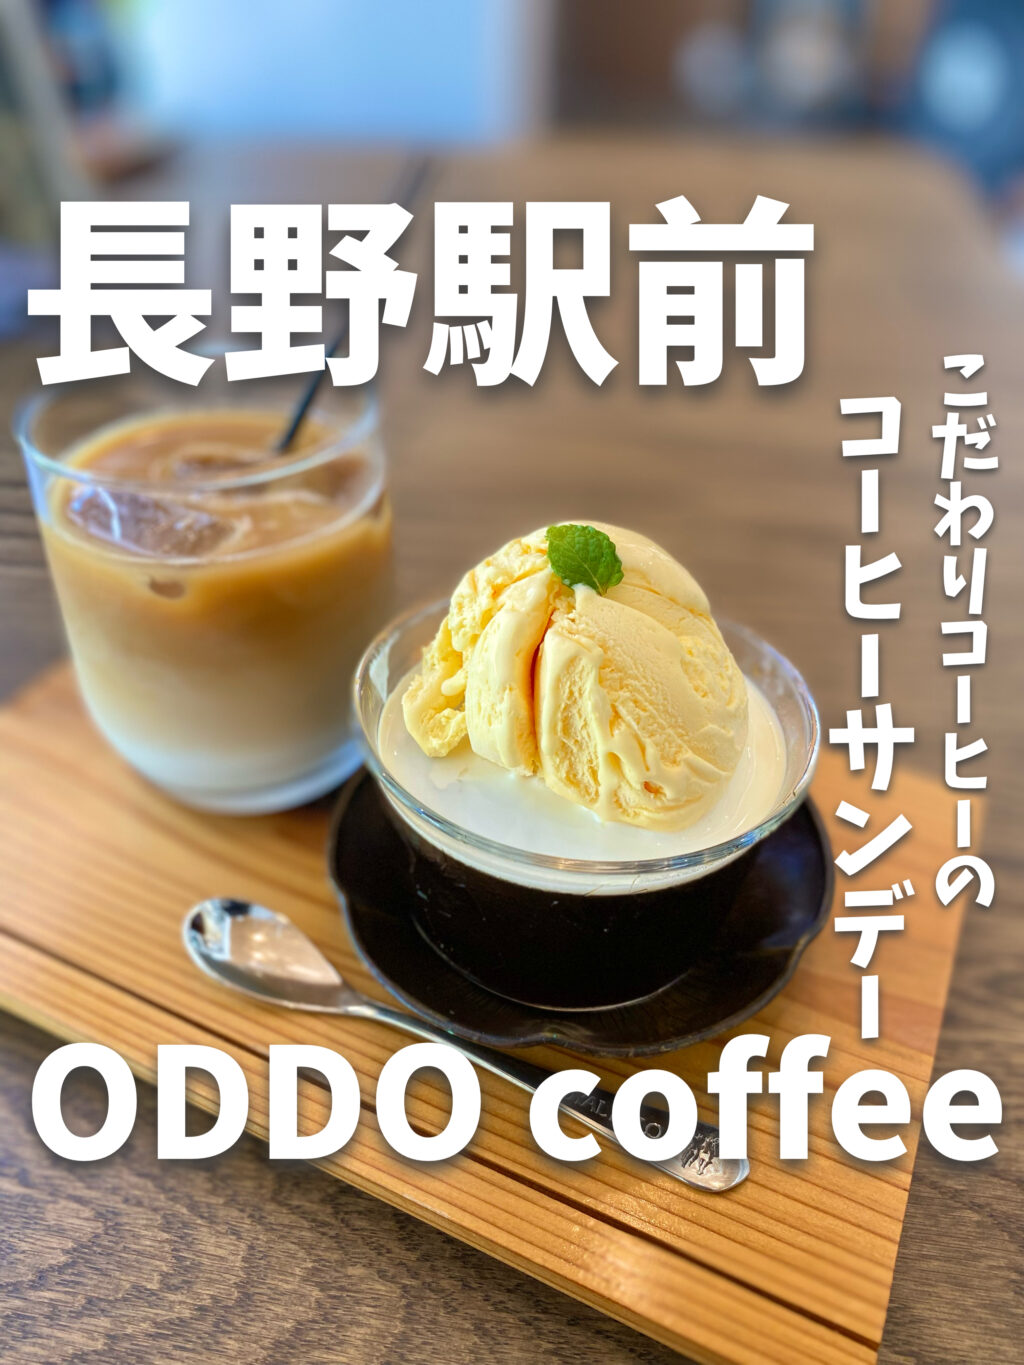 ODDO coffee